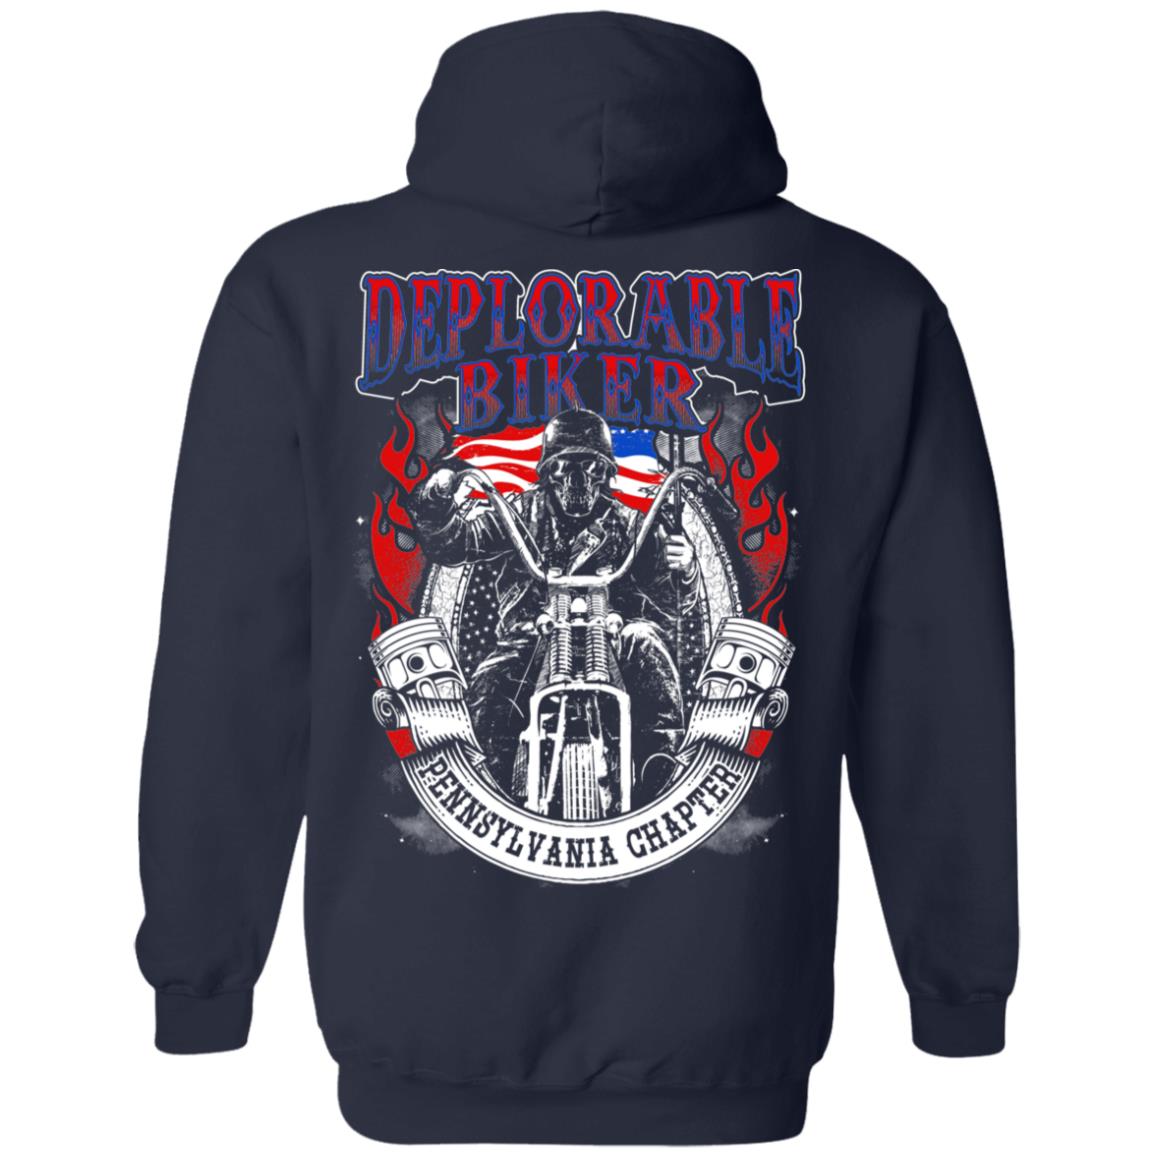 Deplorable Biker - Pennsylvania Chapter Apparel